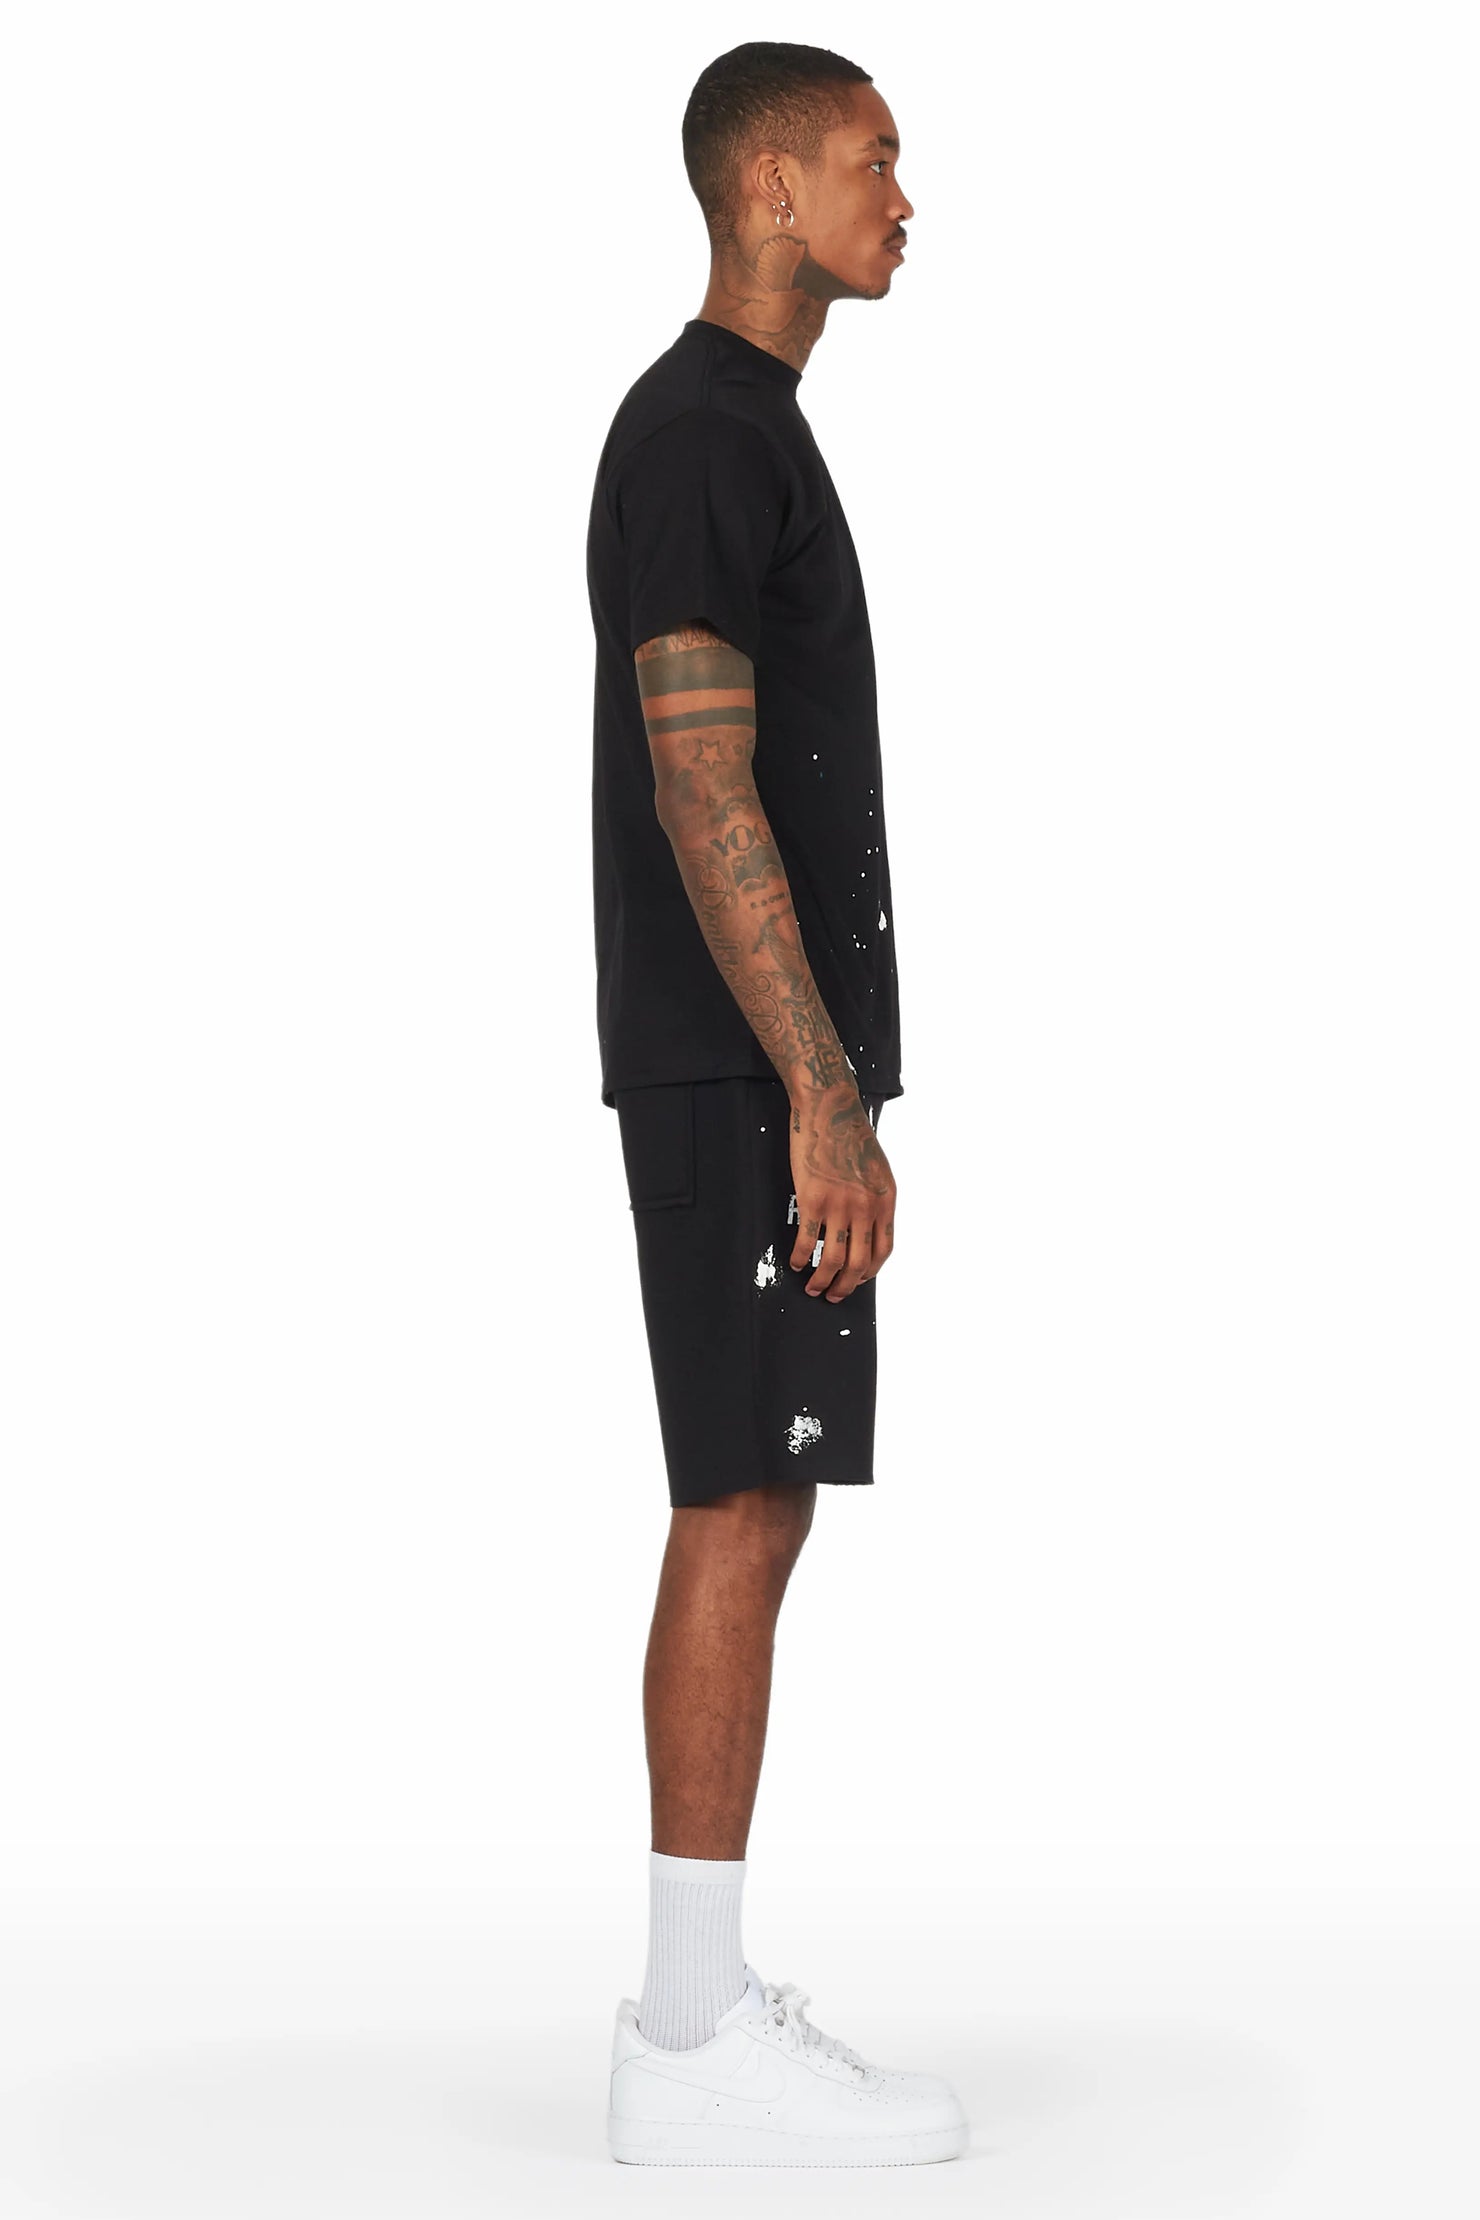 Jaco Black T-Shirt Short Set